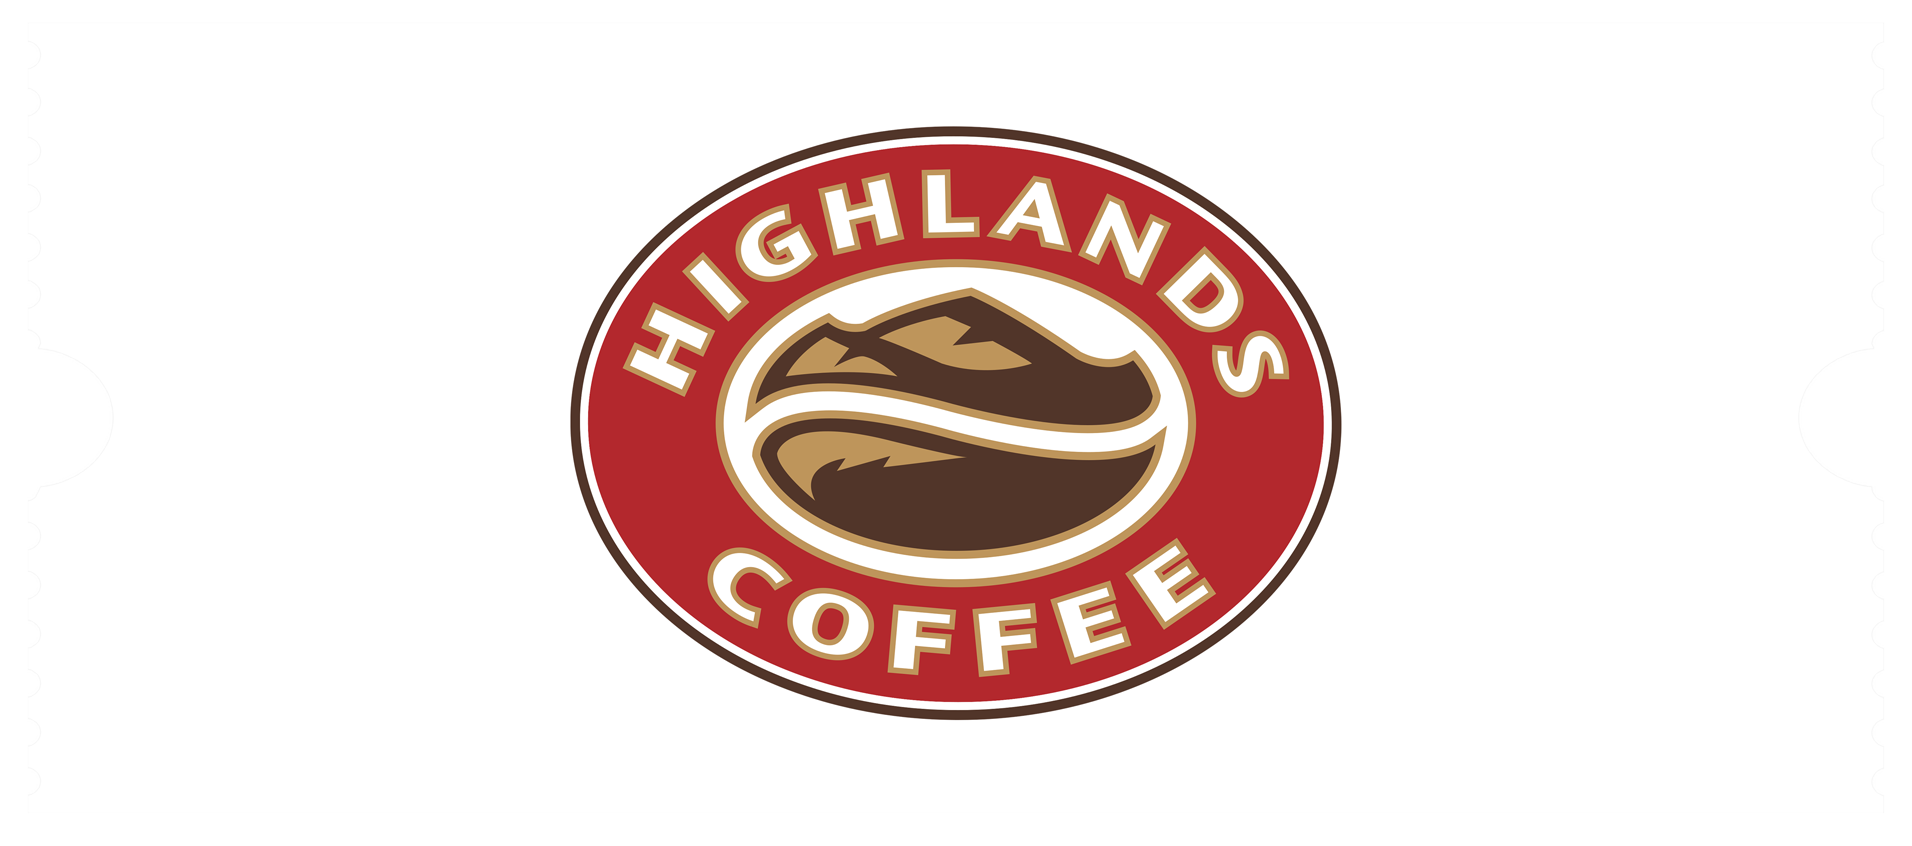 Highlands-Coffee-1